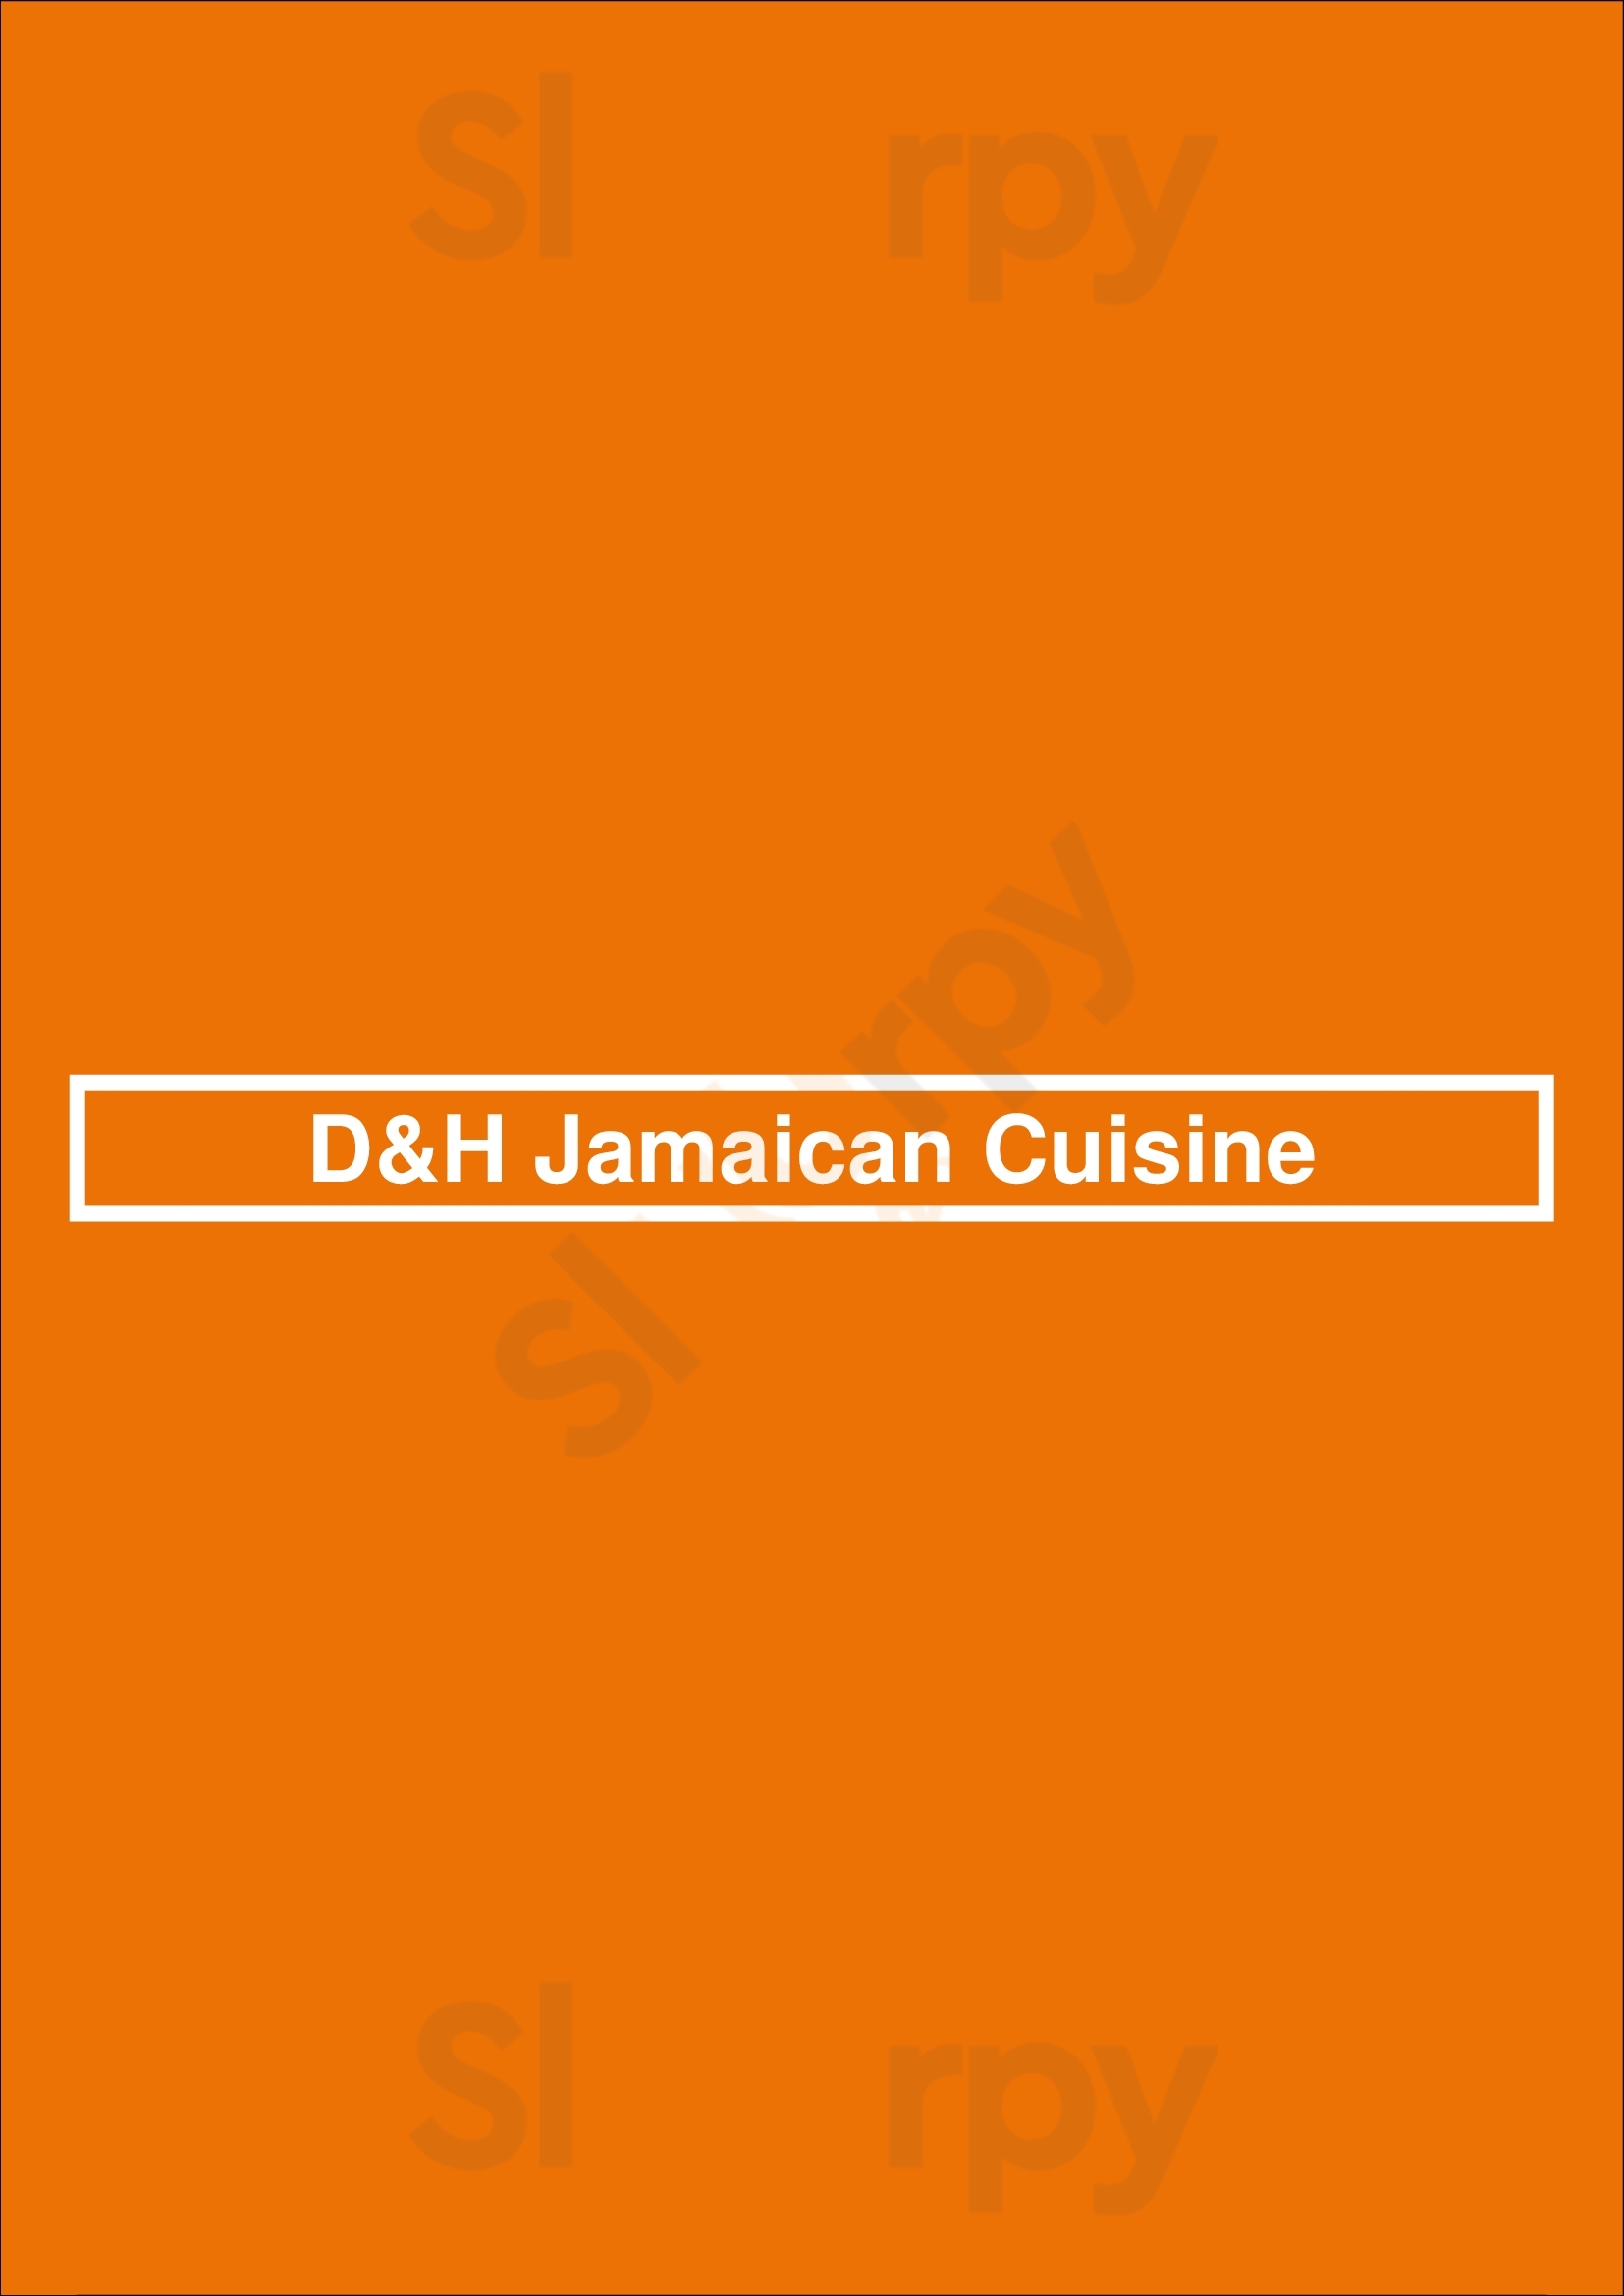 Dh4 Jamaican Cuisine Restaurant Wilmington Menu - 1